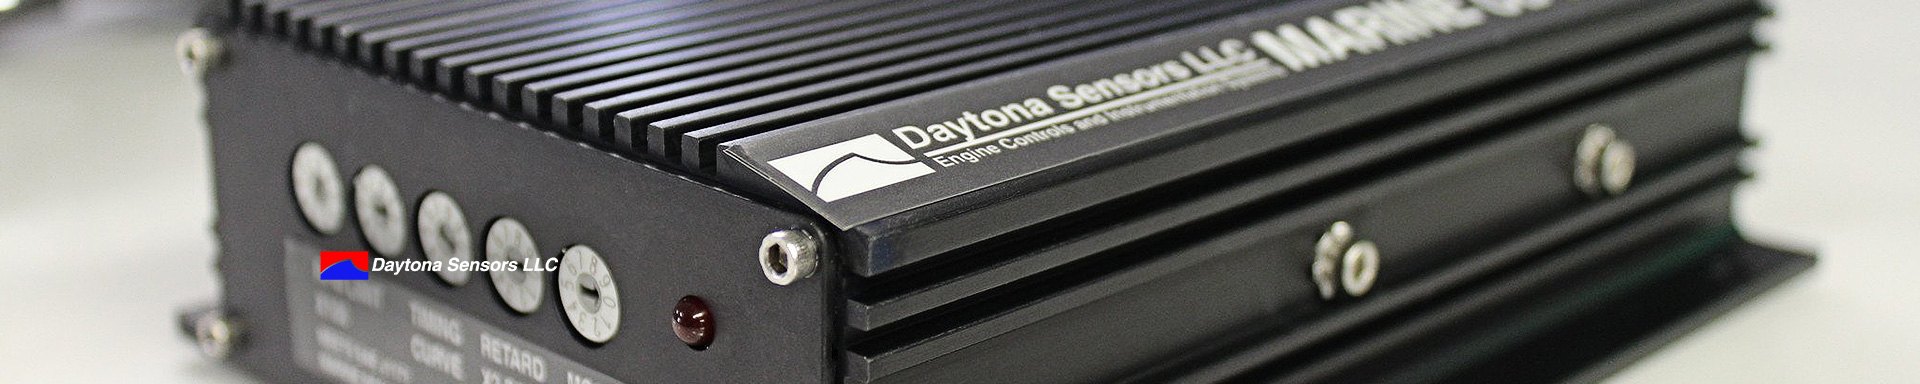 Daytona Sensors Diagnostic & Testing Tools